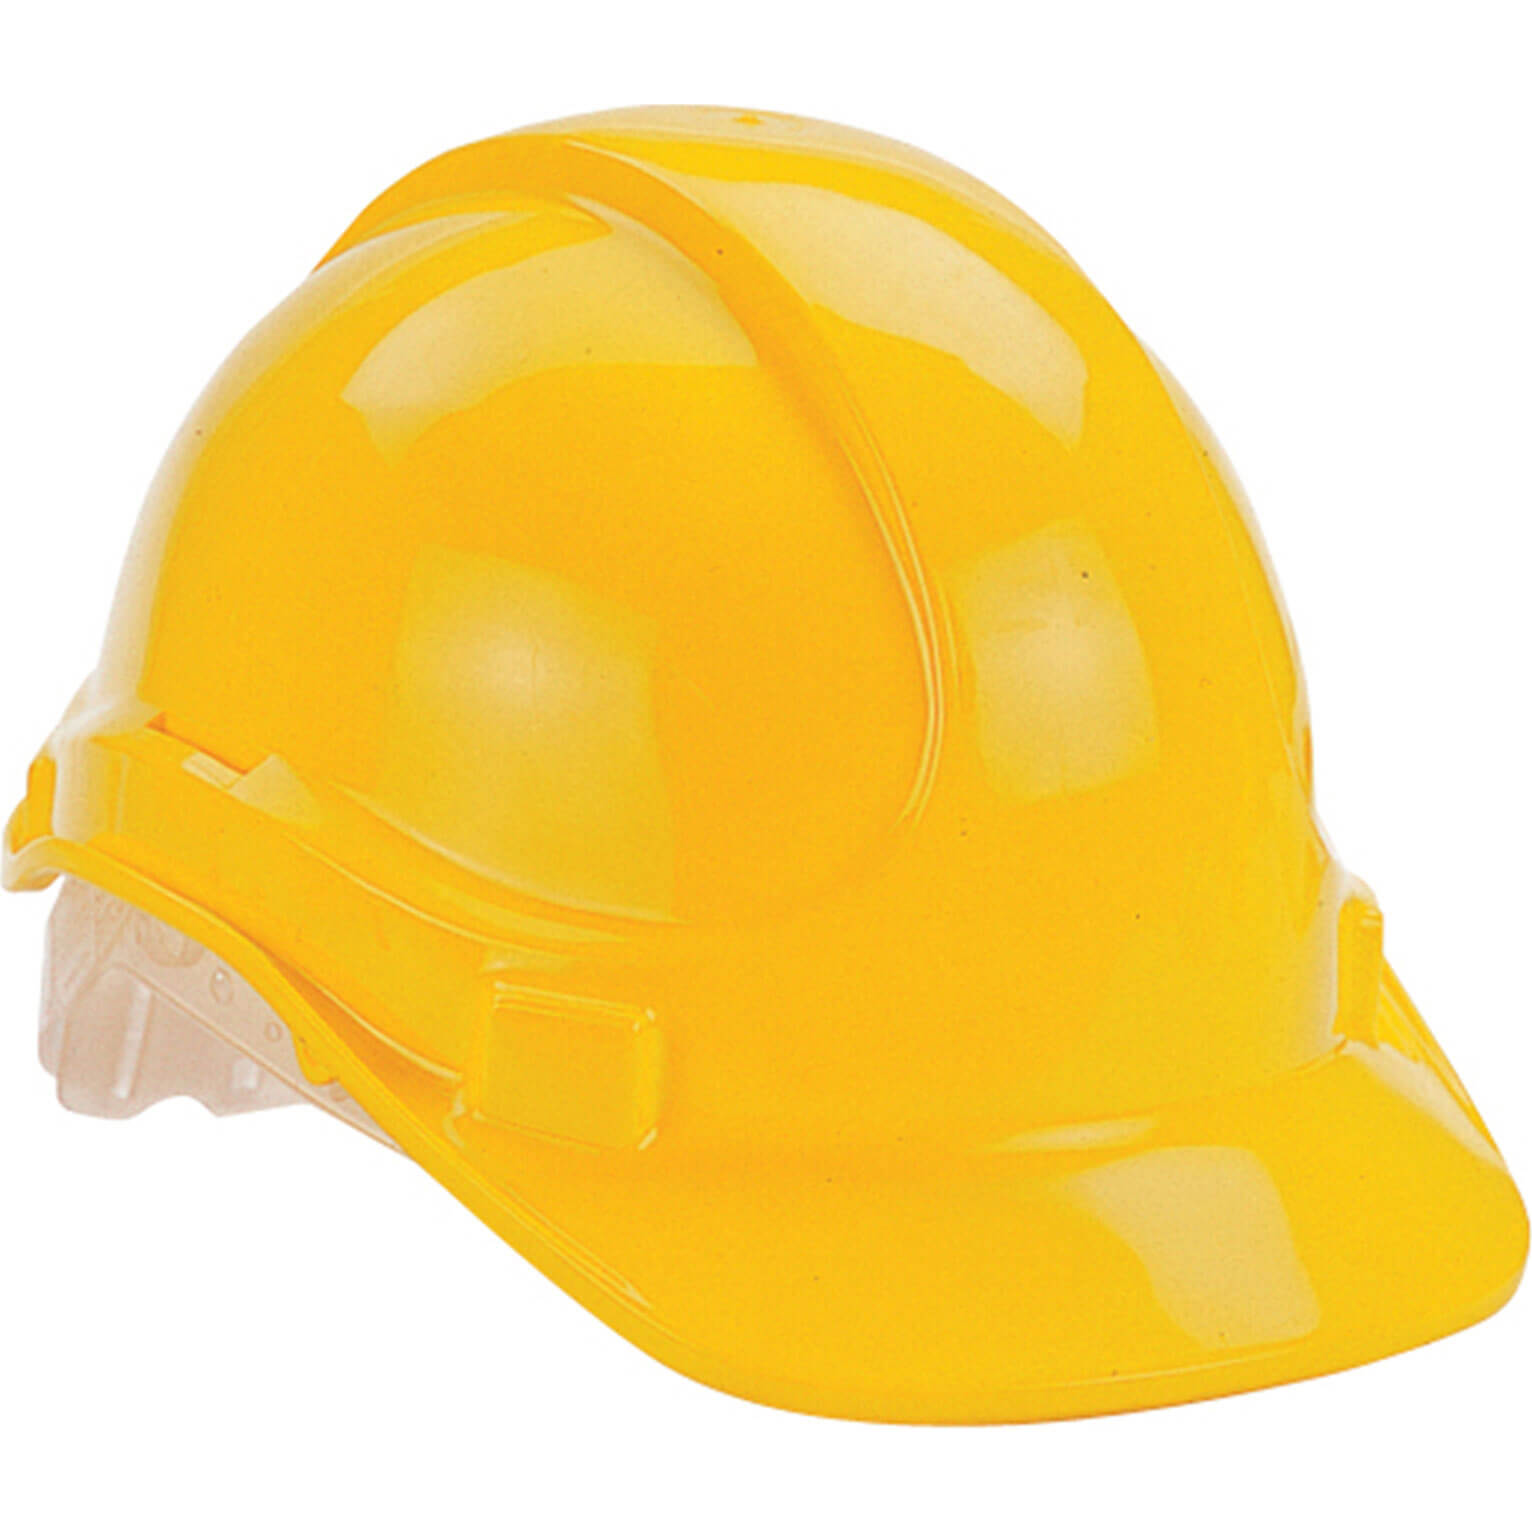 Image of Vitrex Hard Hat Safety Helmet Yellow